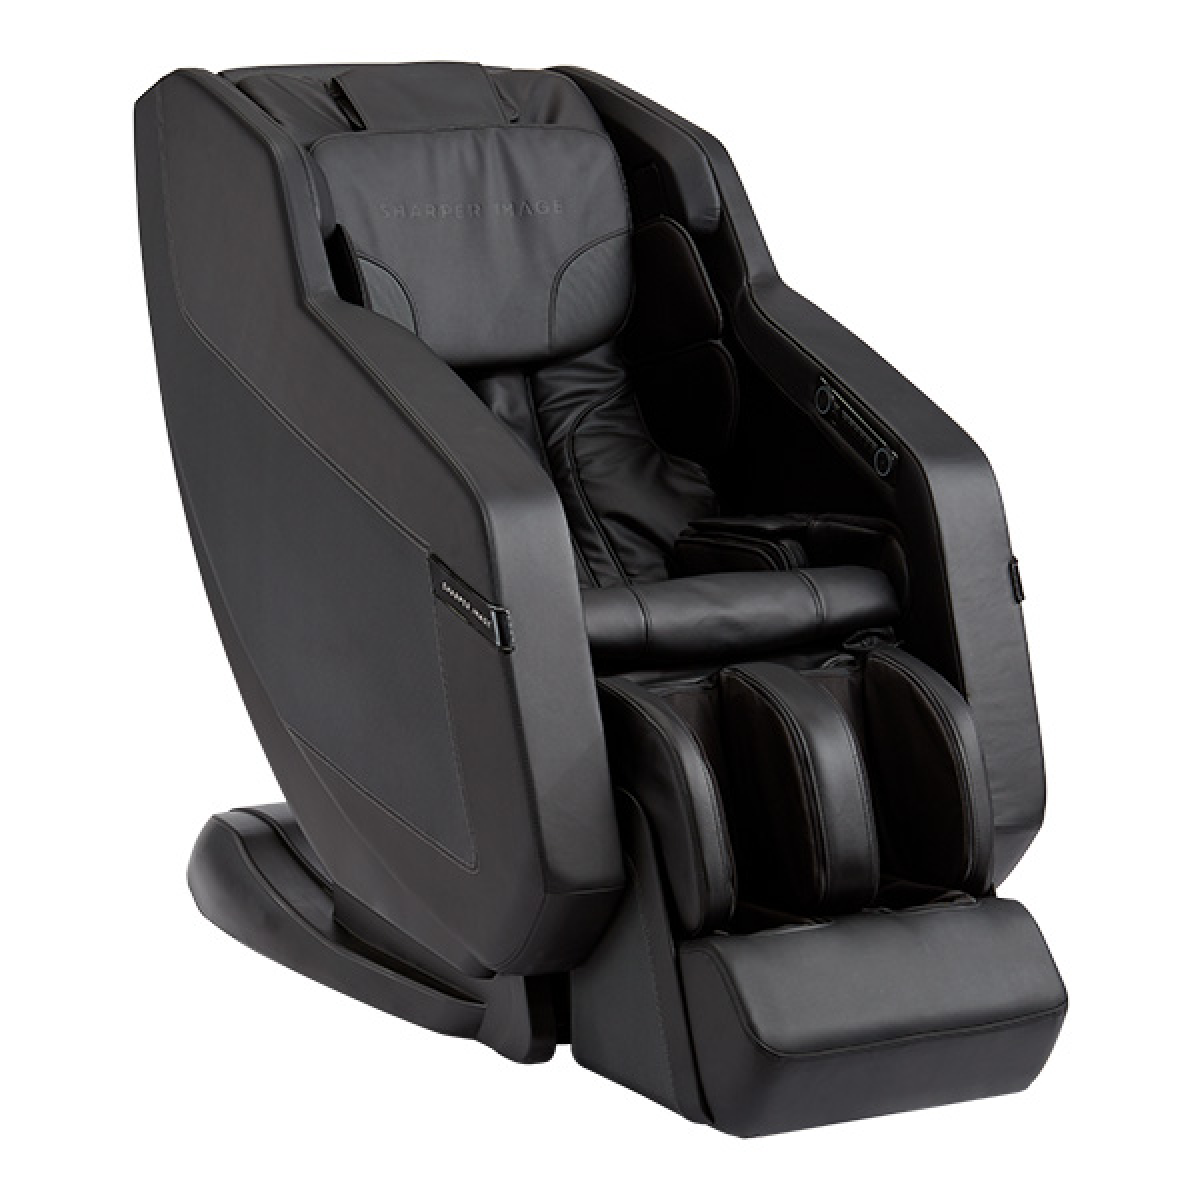 Sharper Image Relieve 3D Zero Gravity Massage Chair in Black - Home Bars USA